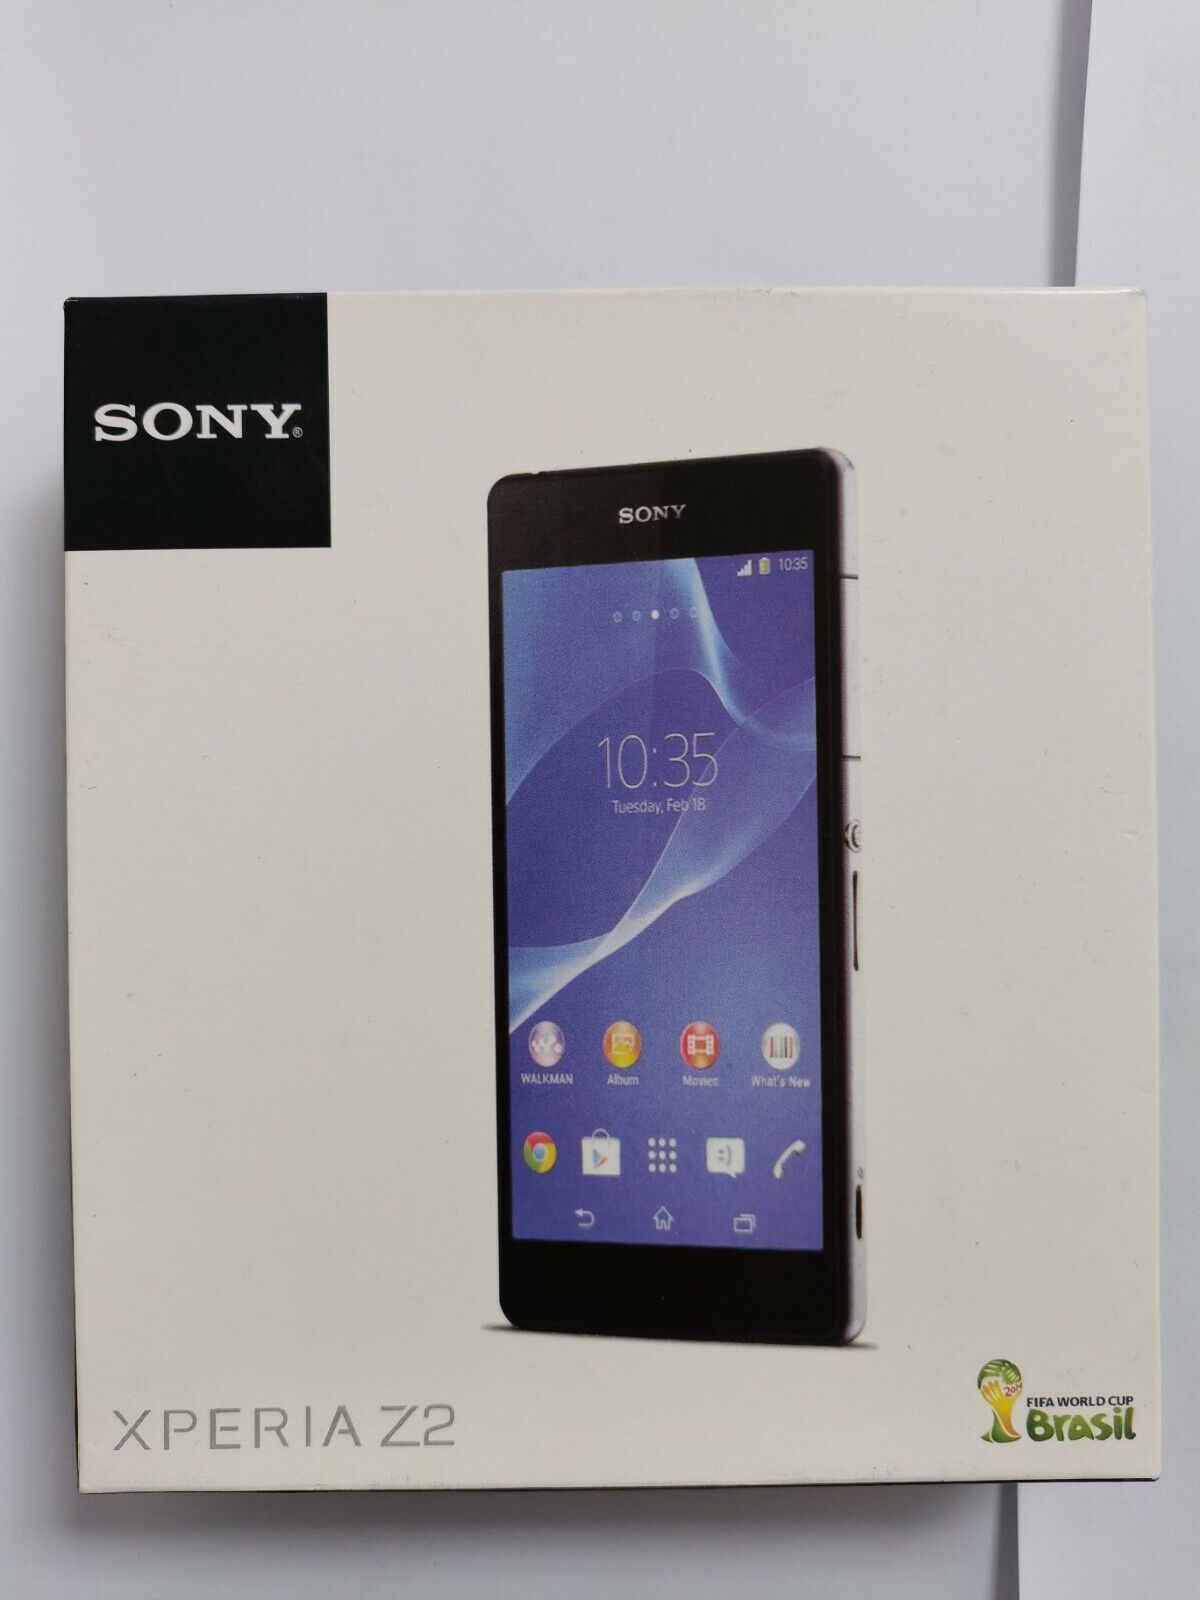 Cubeta Murciélago Cortar Sony Xperia Z2 D6503 - 16GB - Black (Unlocked) Smartphone 95673858096 | eBay